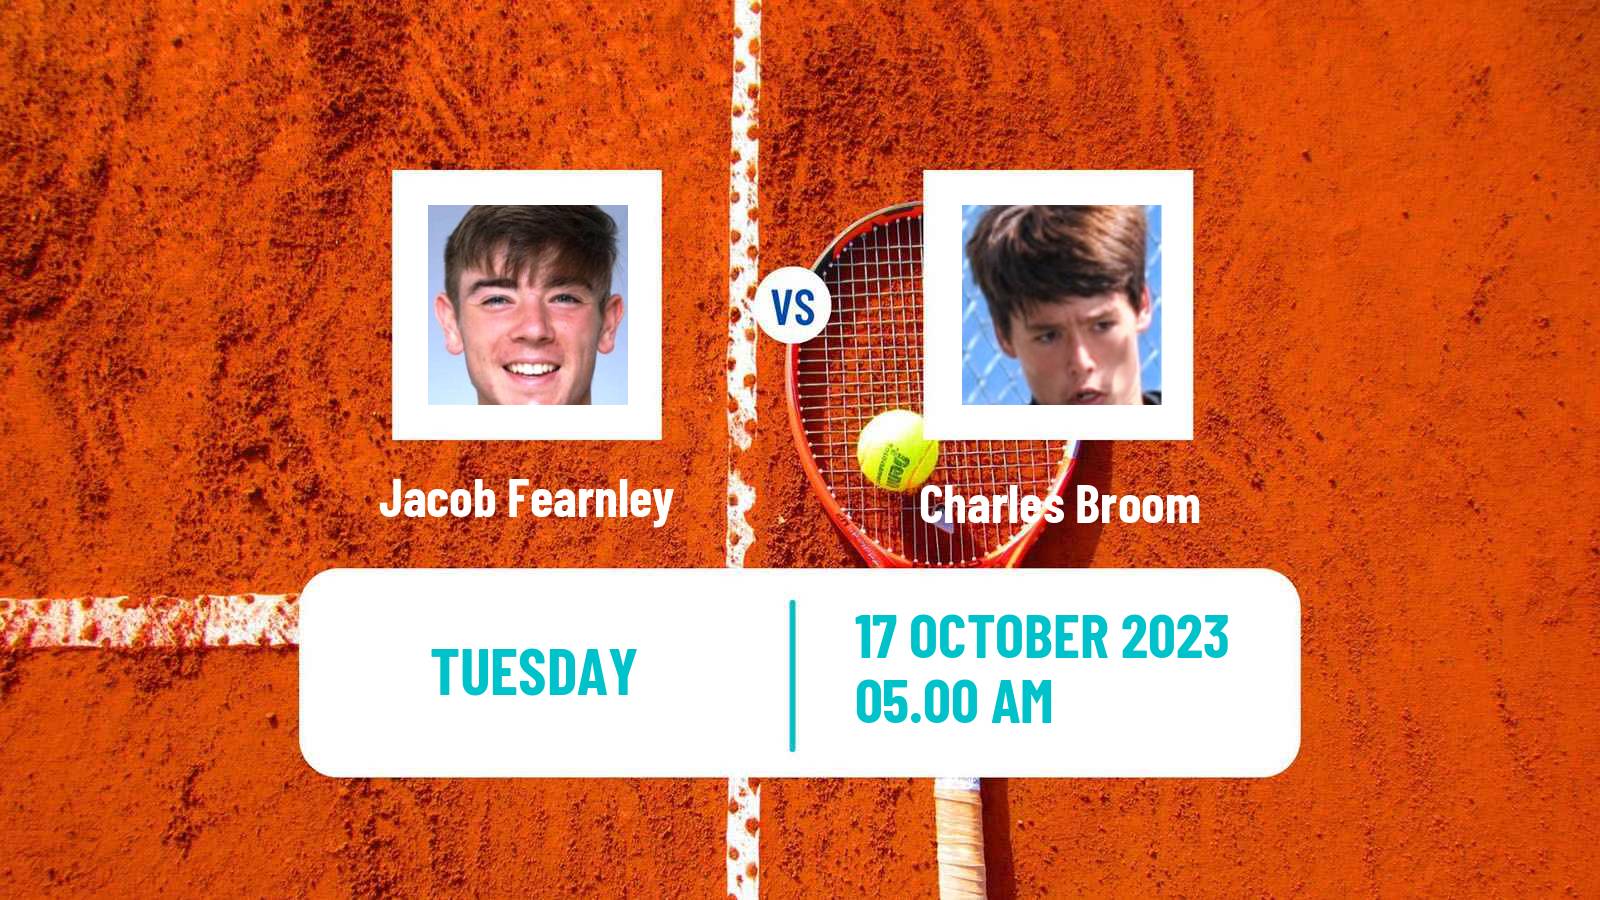 Tennis ITF M25 Edgbaston Men Jacob Fearnley - Charles Broom